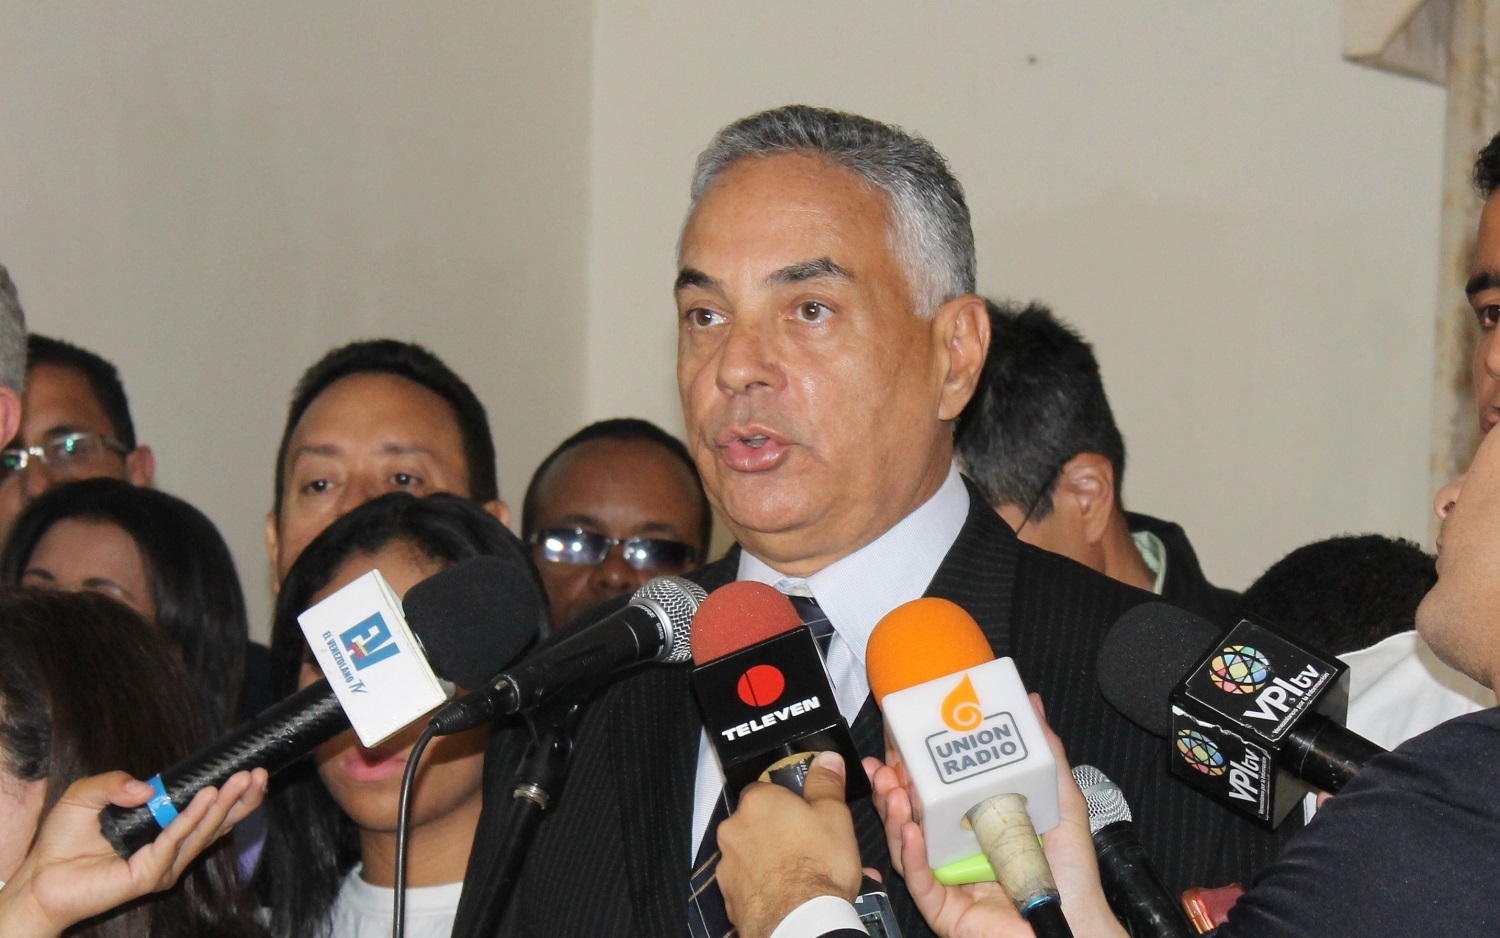 Rafael Veloz: Los ataques del régimen no detendrán nuestra responsabilidad legislativa